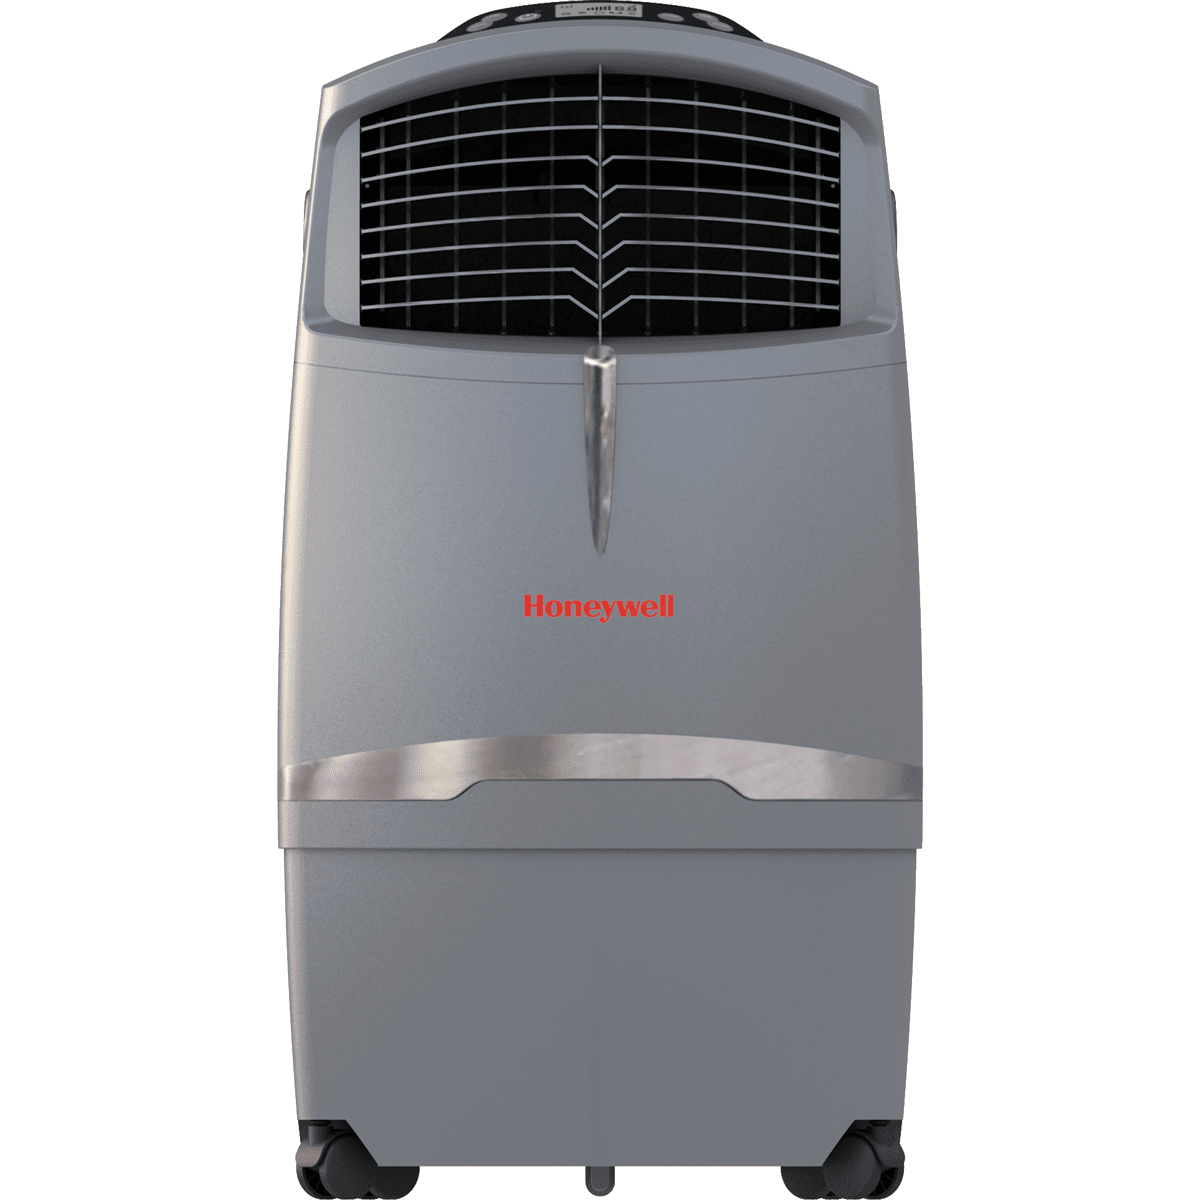 Honeywell 525 CFM Evaporative Cooler - Gray (CL30XC)